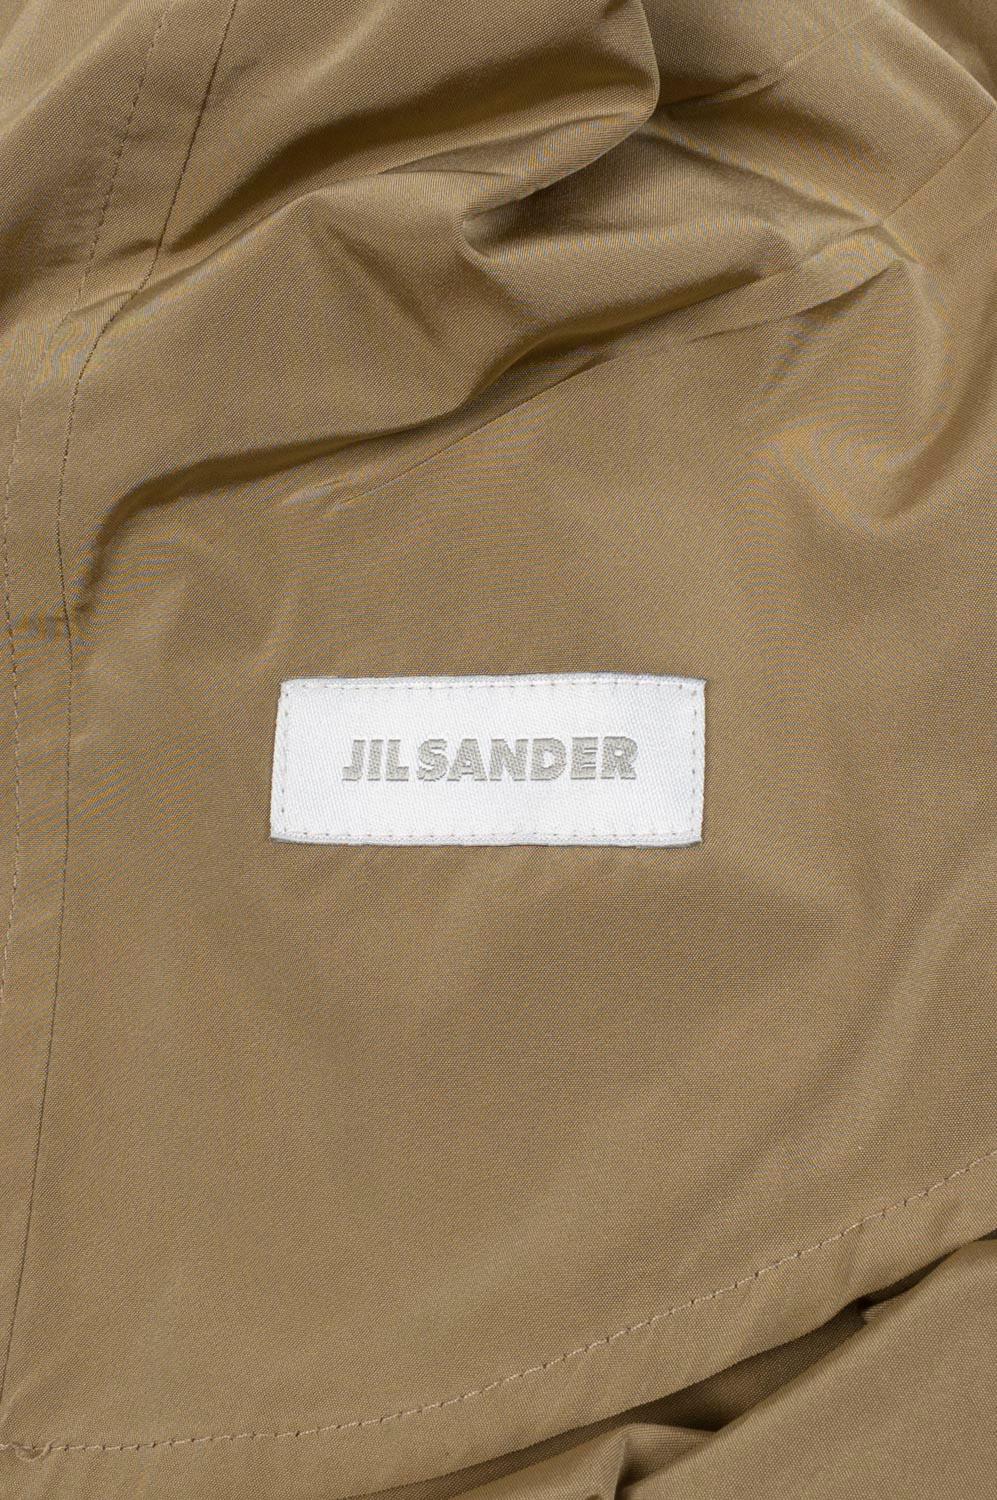 Jil Sander by Raf Simons Men Light Trench Over Coat Size 44 (L) S427 For Sale 2